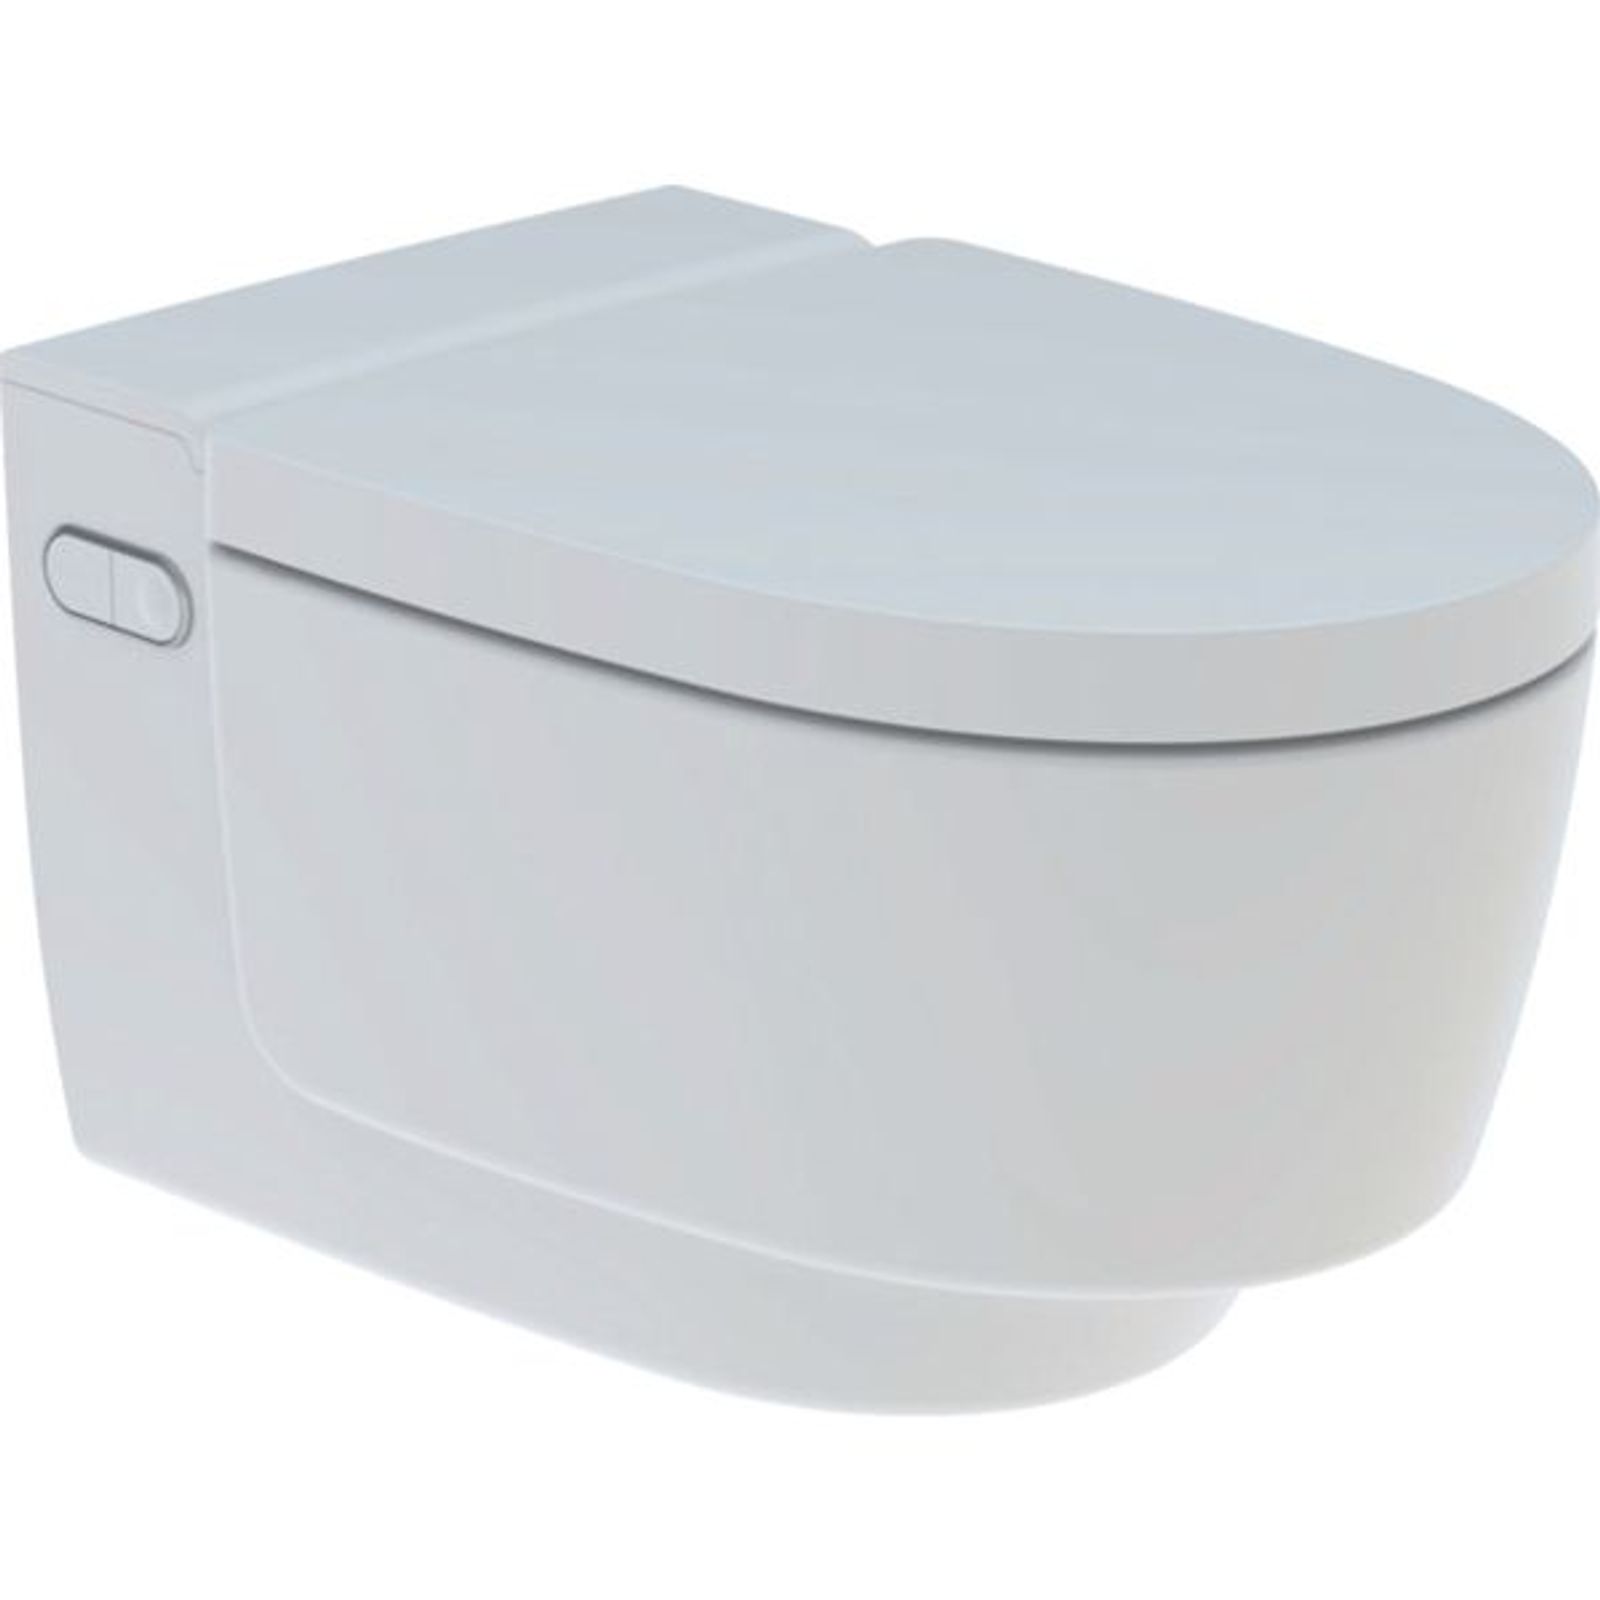 Geberit Geberit AquaClean Mera Comfort WC-Komplettanlage UP WWC weiß-alpin